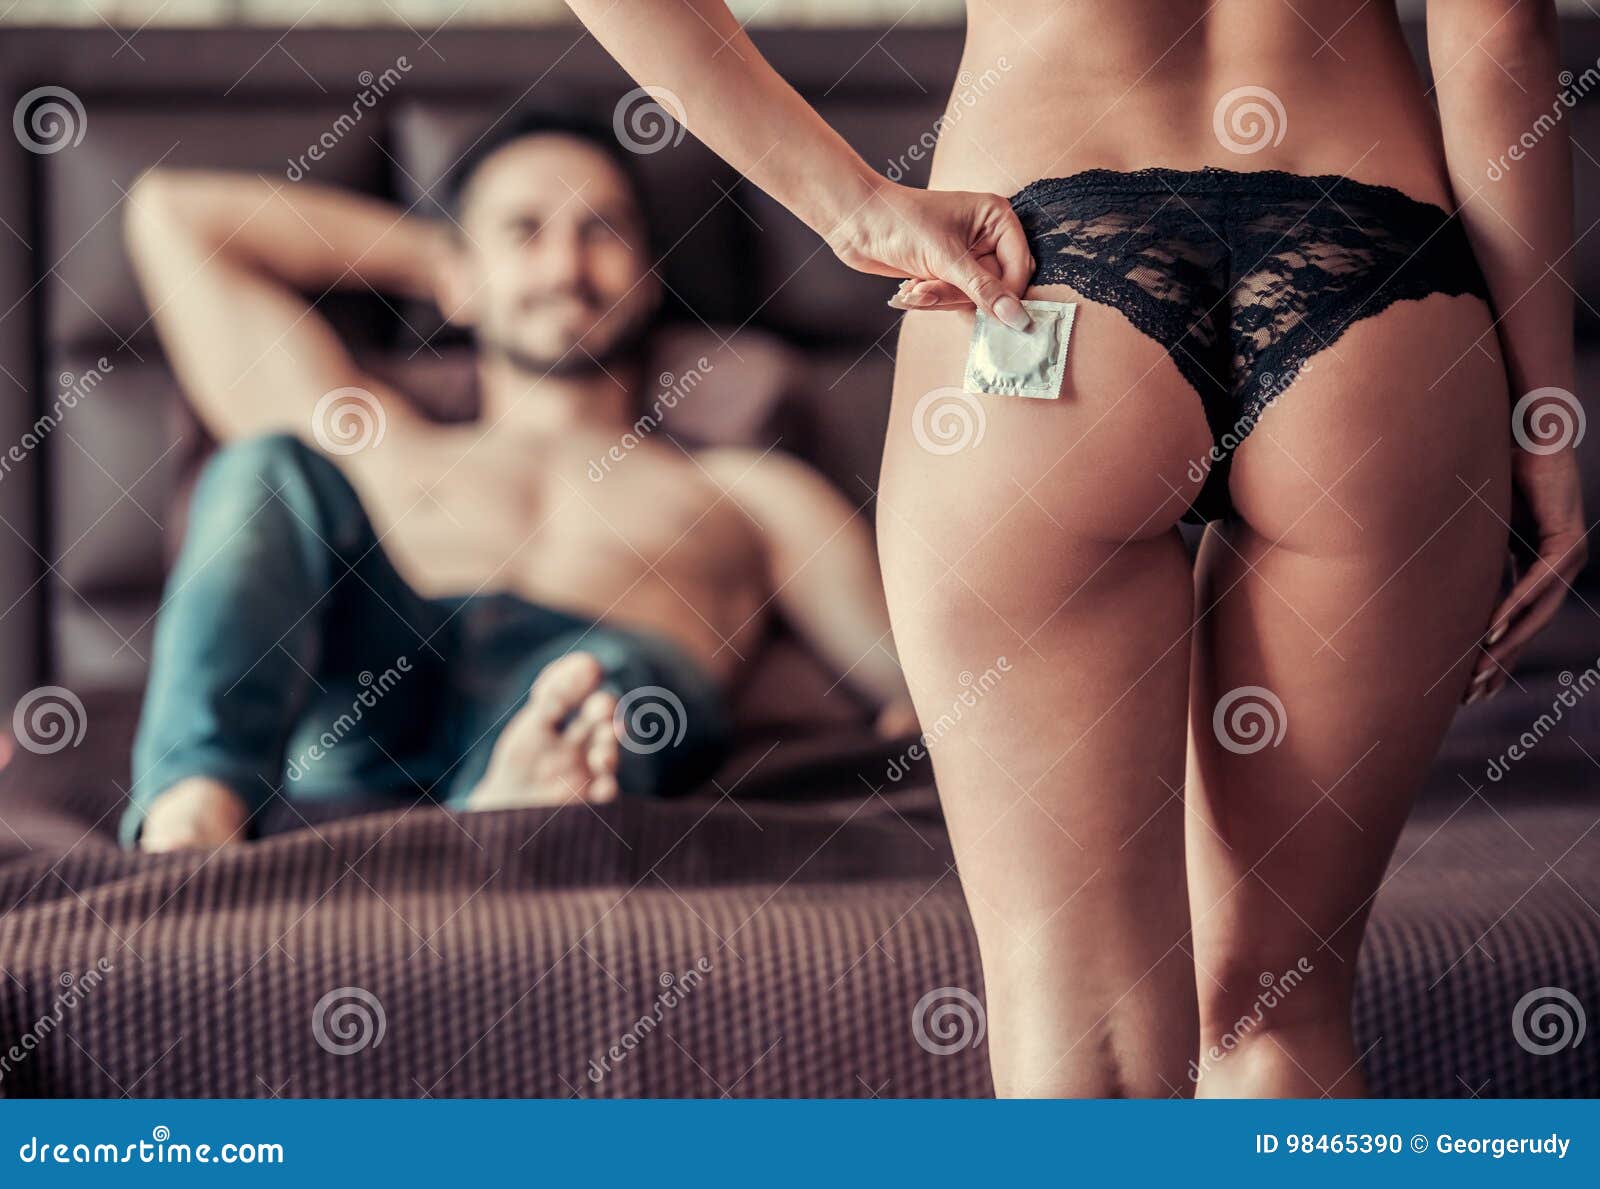 Couple having sex stock photo picture